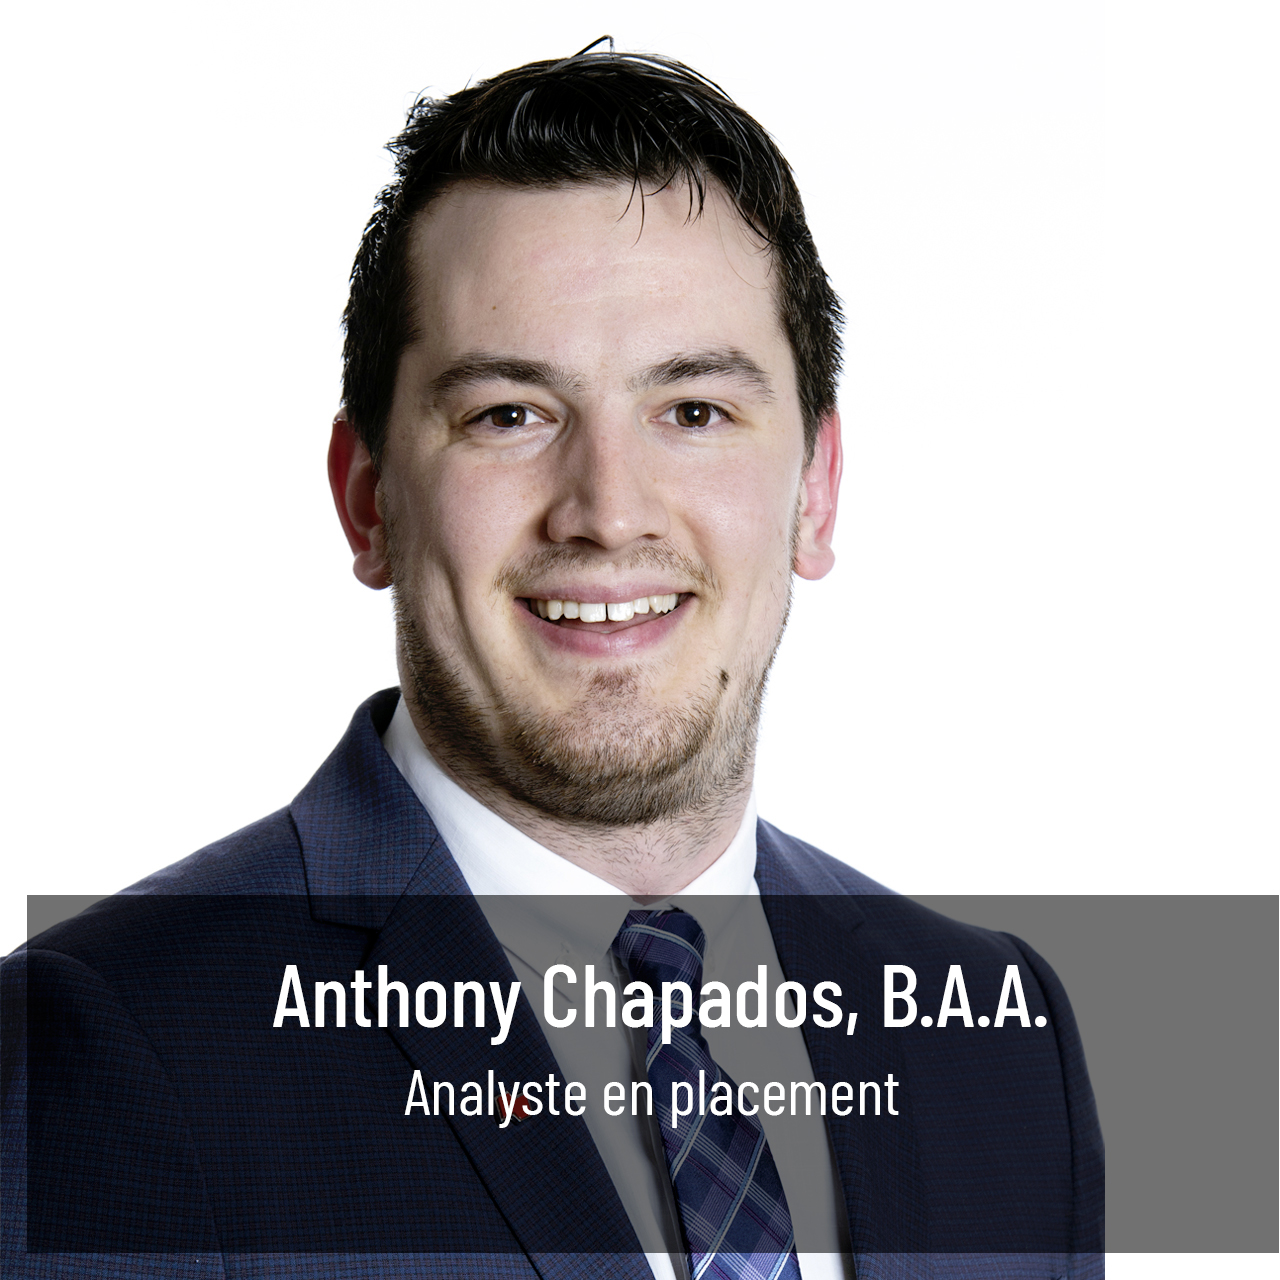 Anthony Chapados